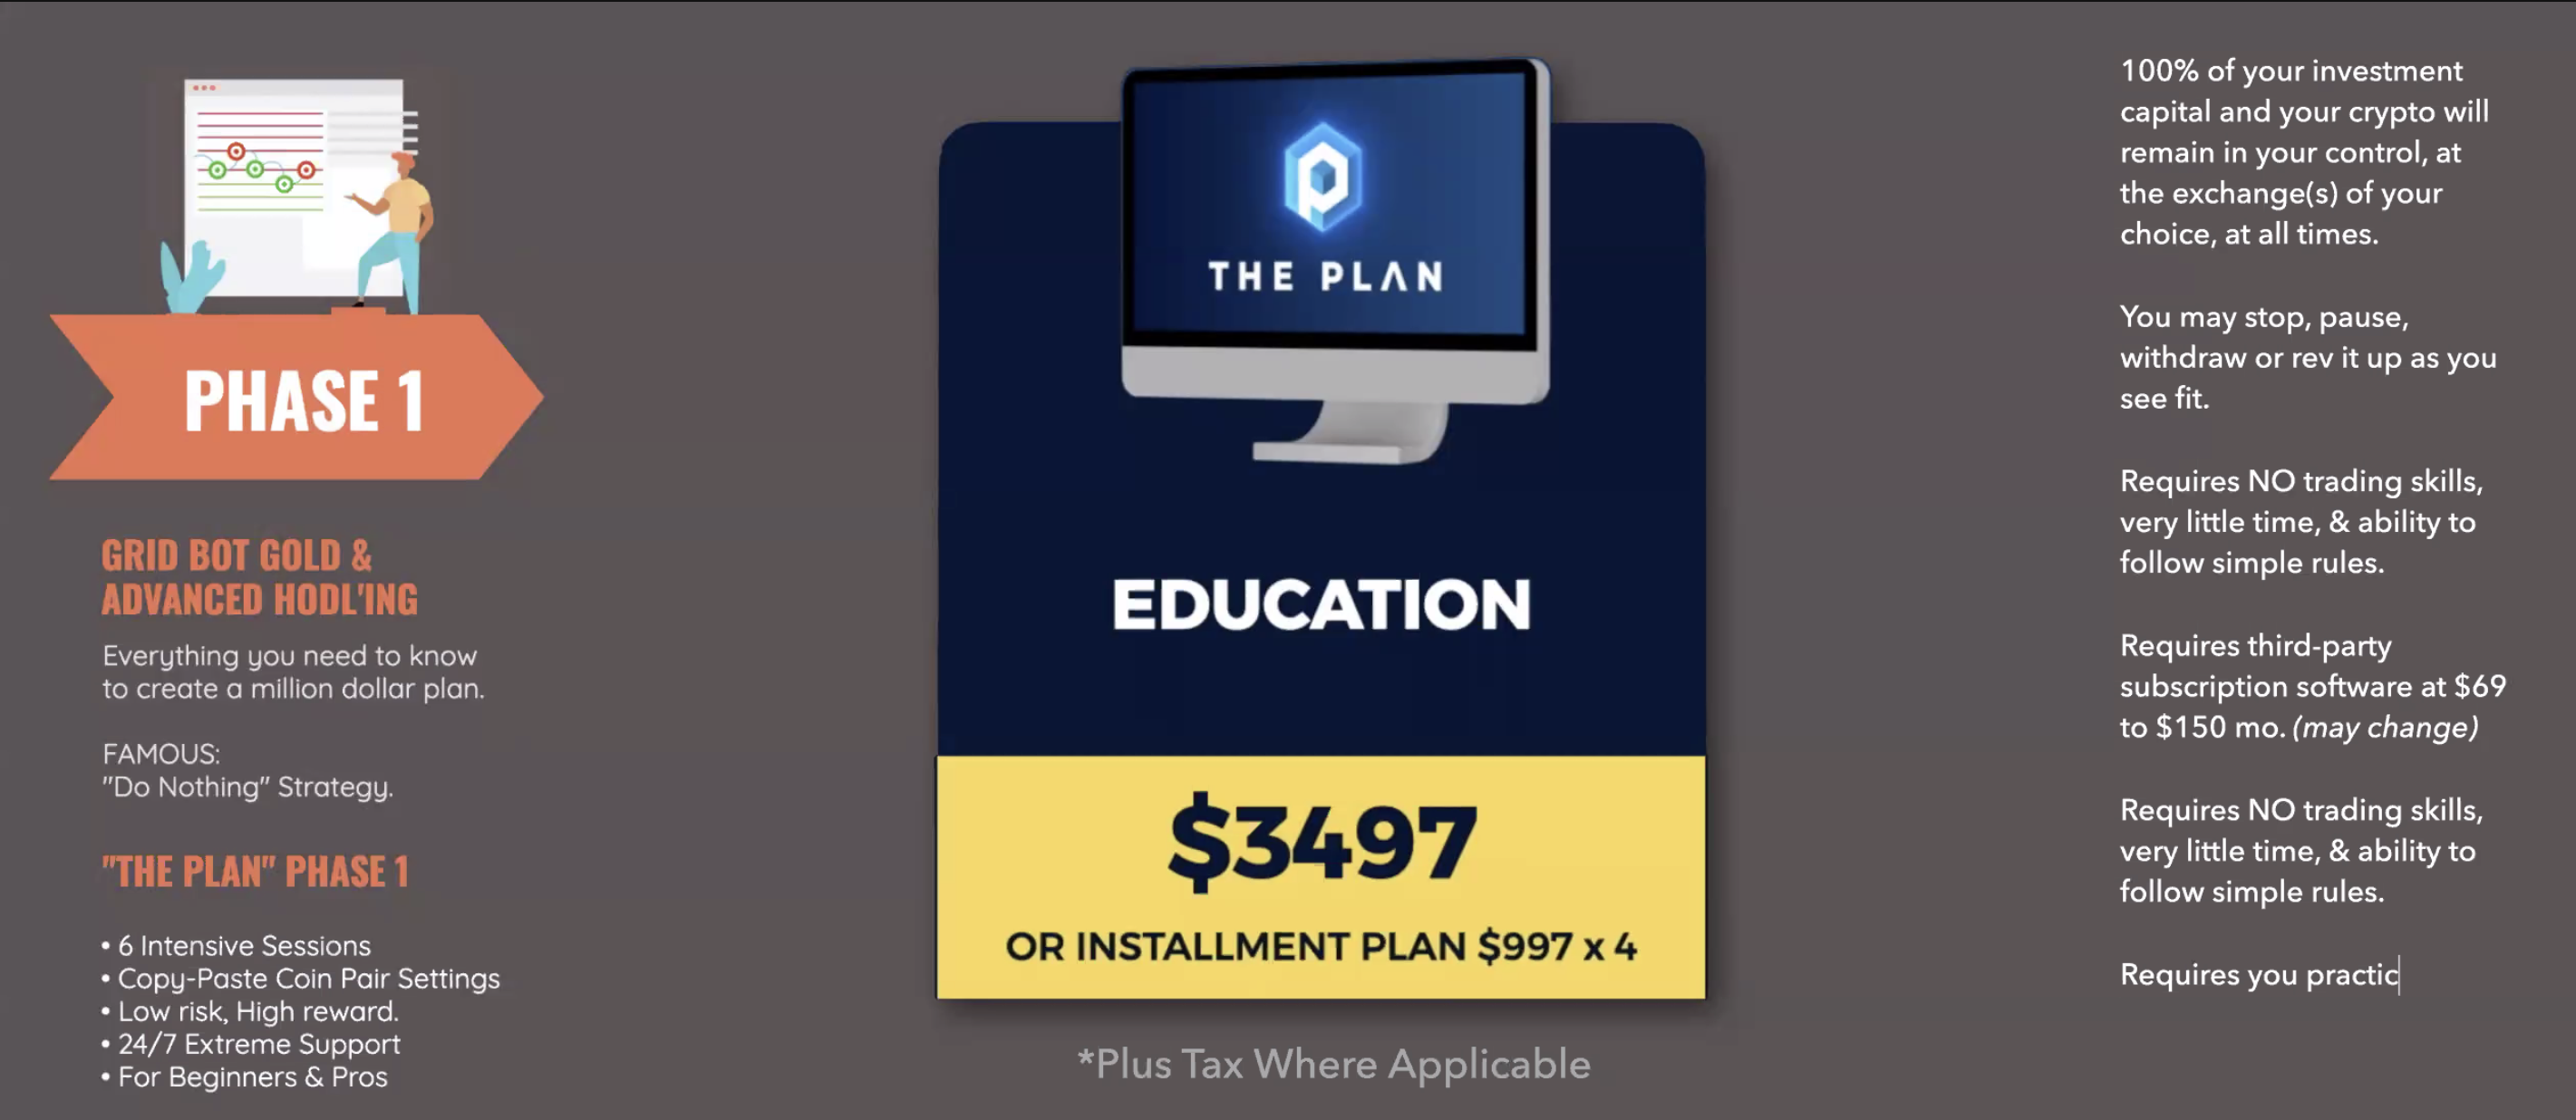 screen shot of The Plan enrollment fee